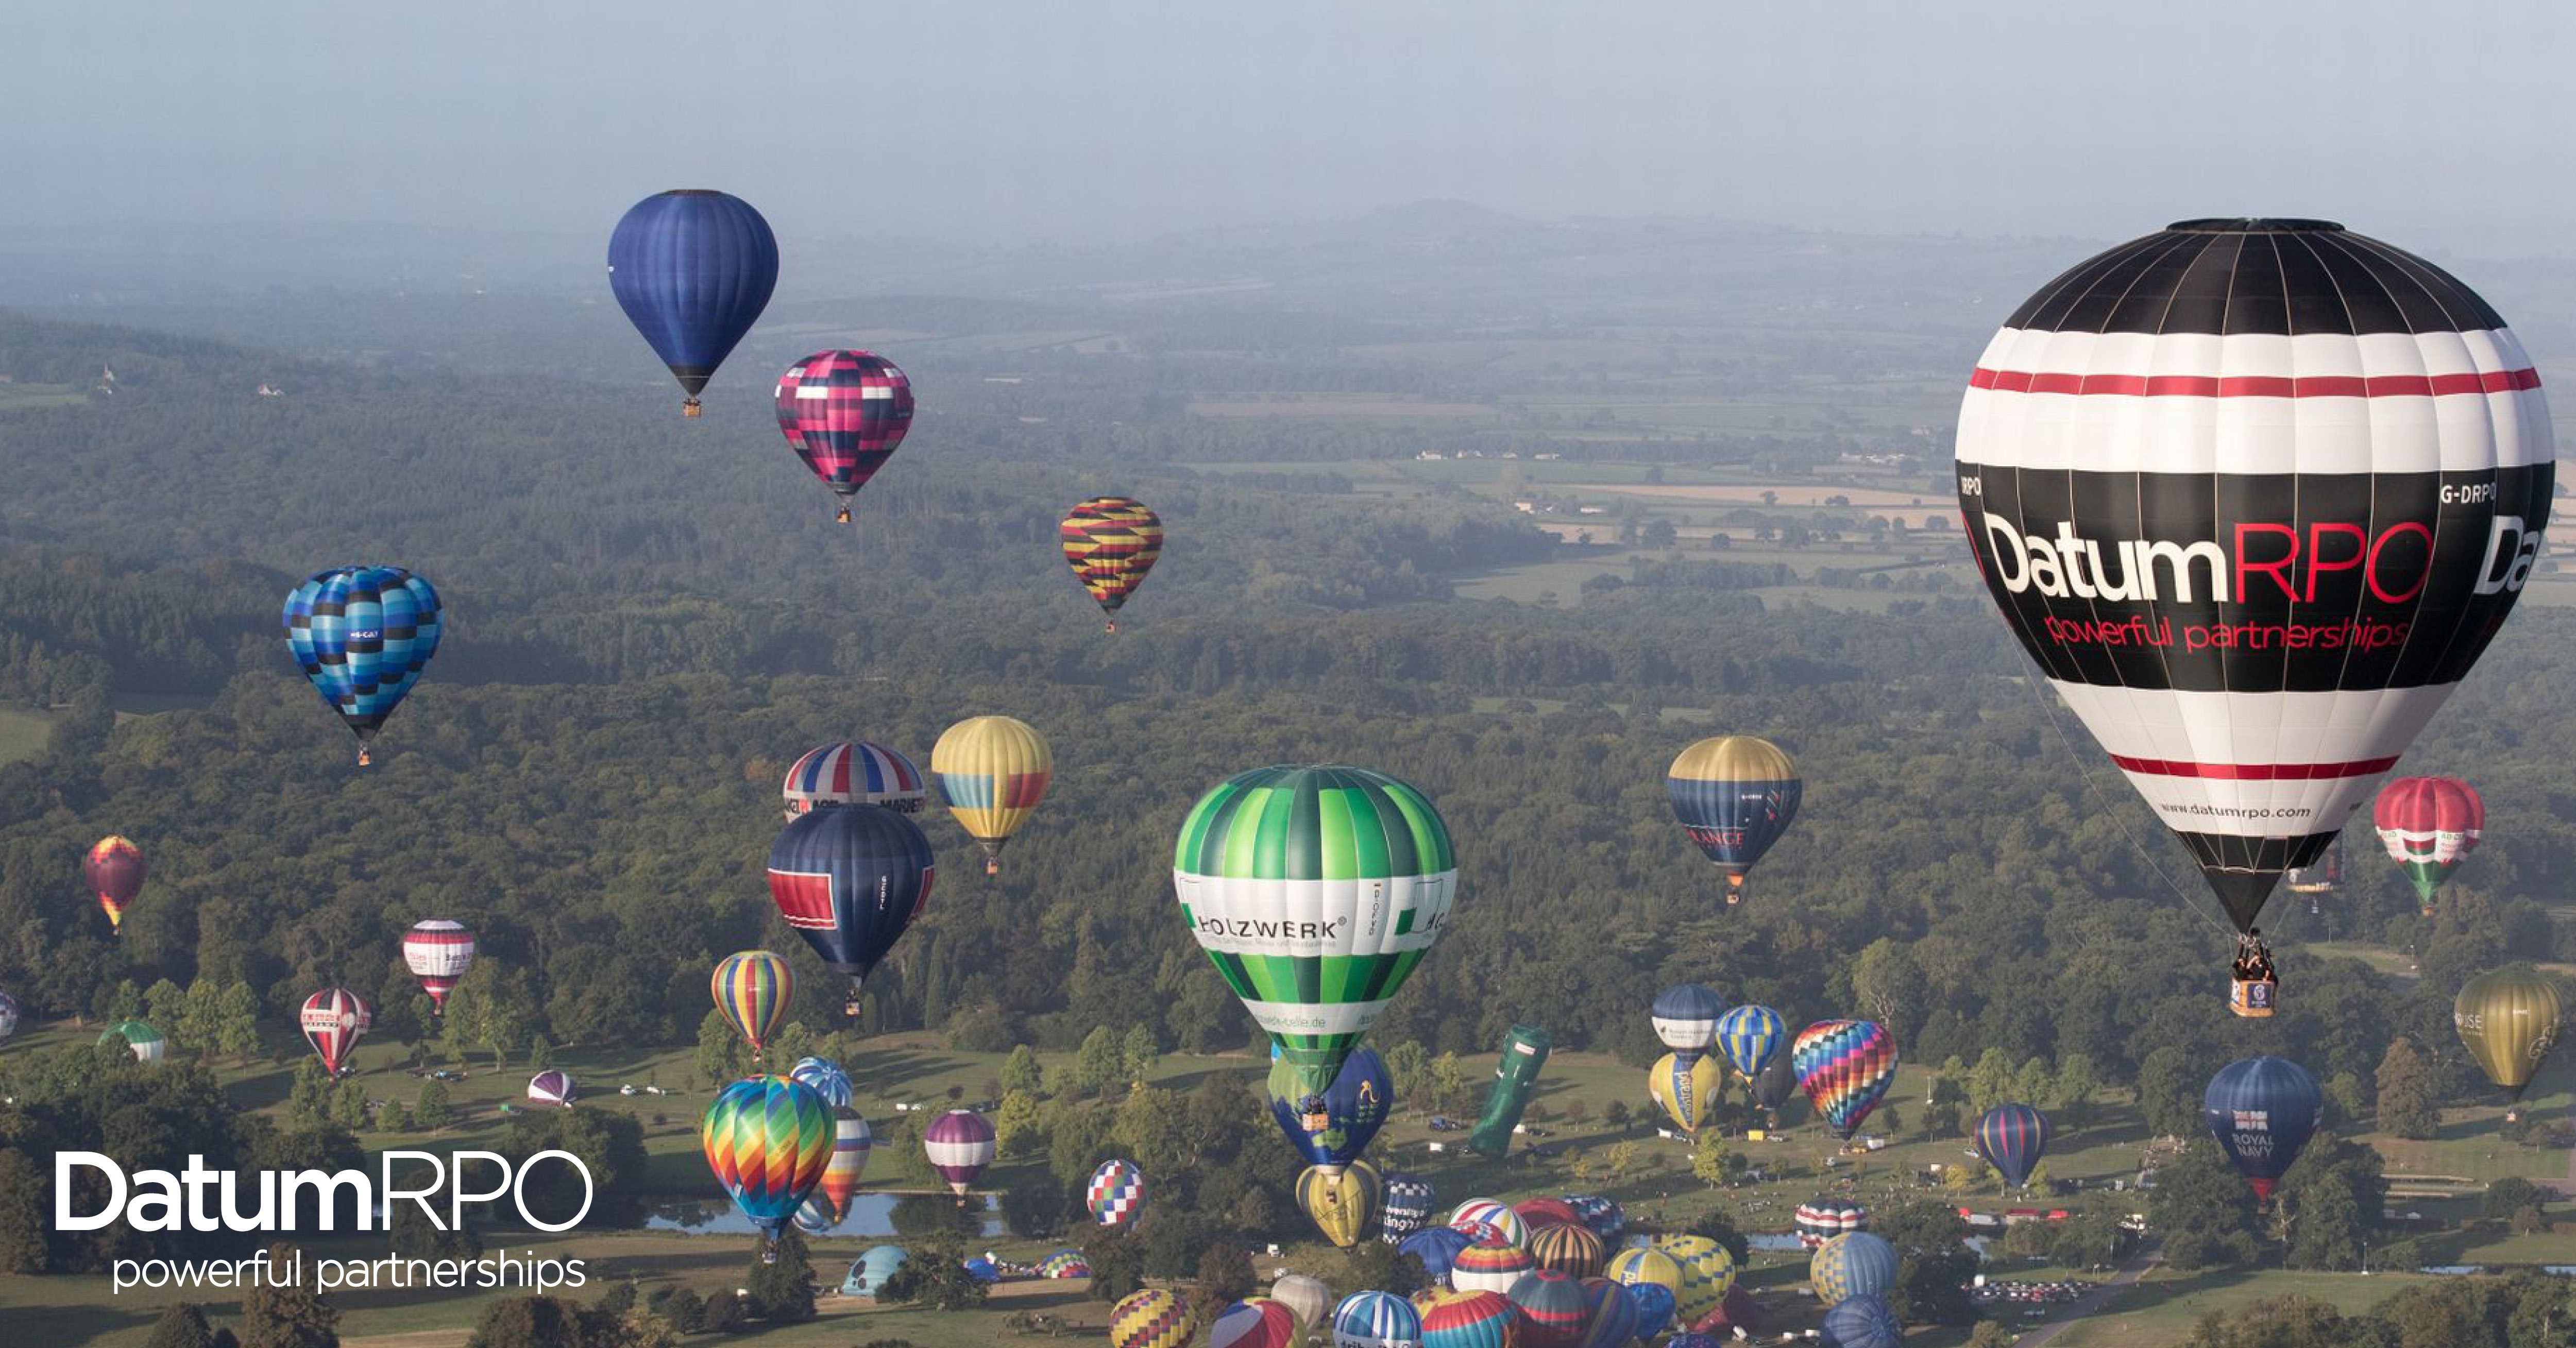 Flying High: Datum RPO hot air balloon amongst the 170 that set new UK record at Longleat Safari Park